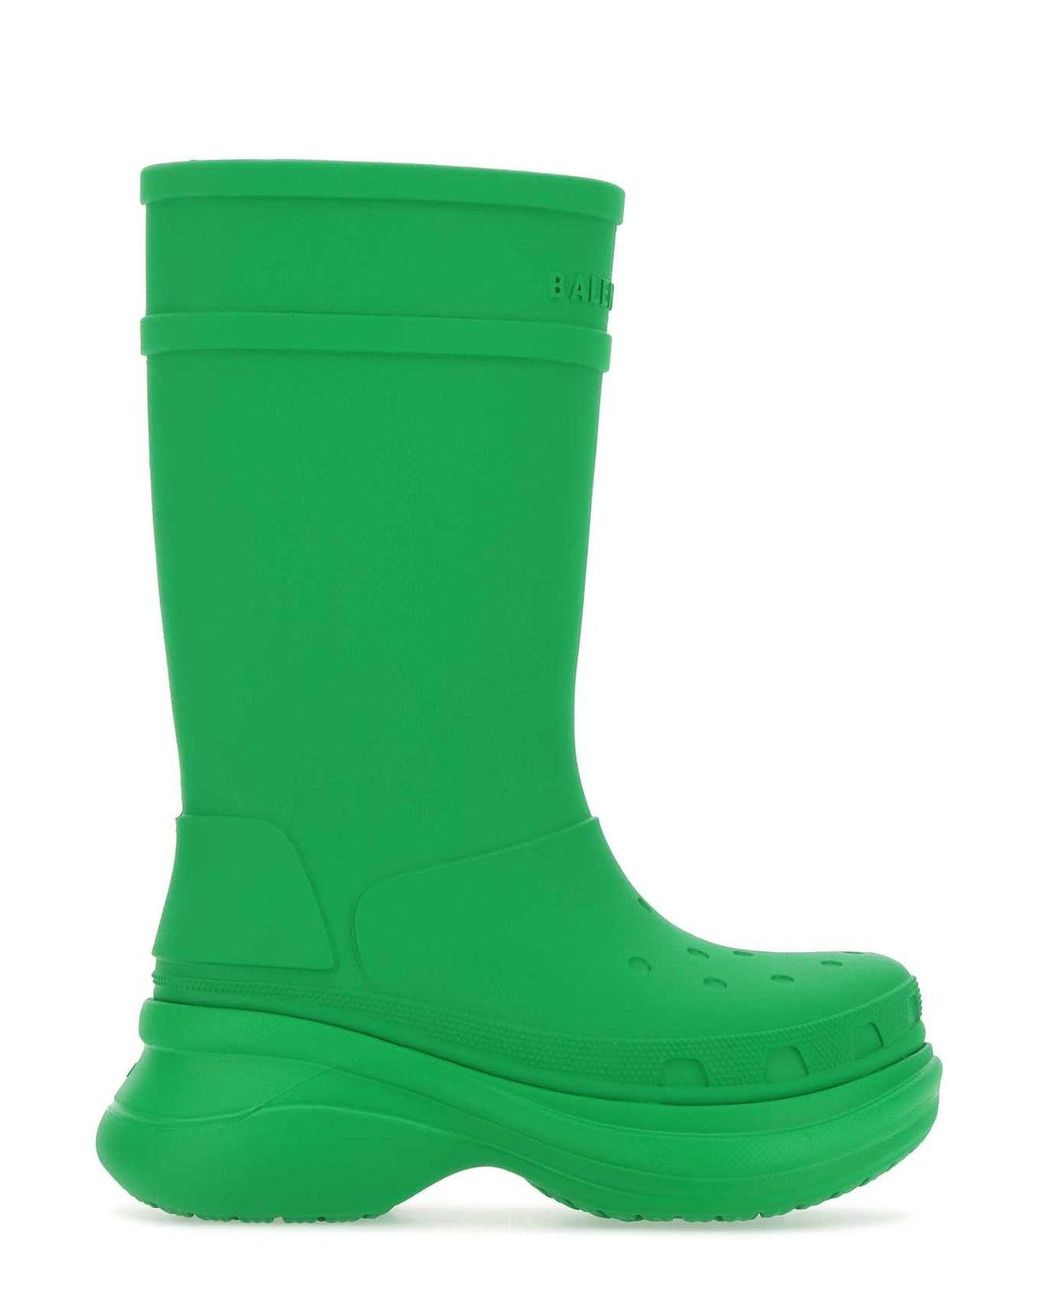 Balenciaga Grass Rubber Boots in Green | Lyst